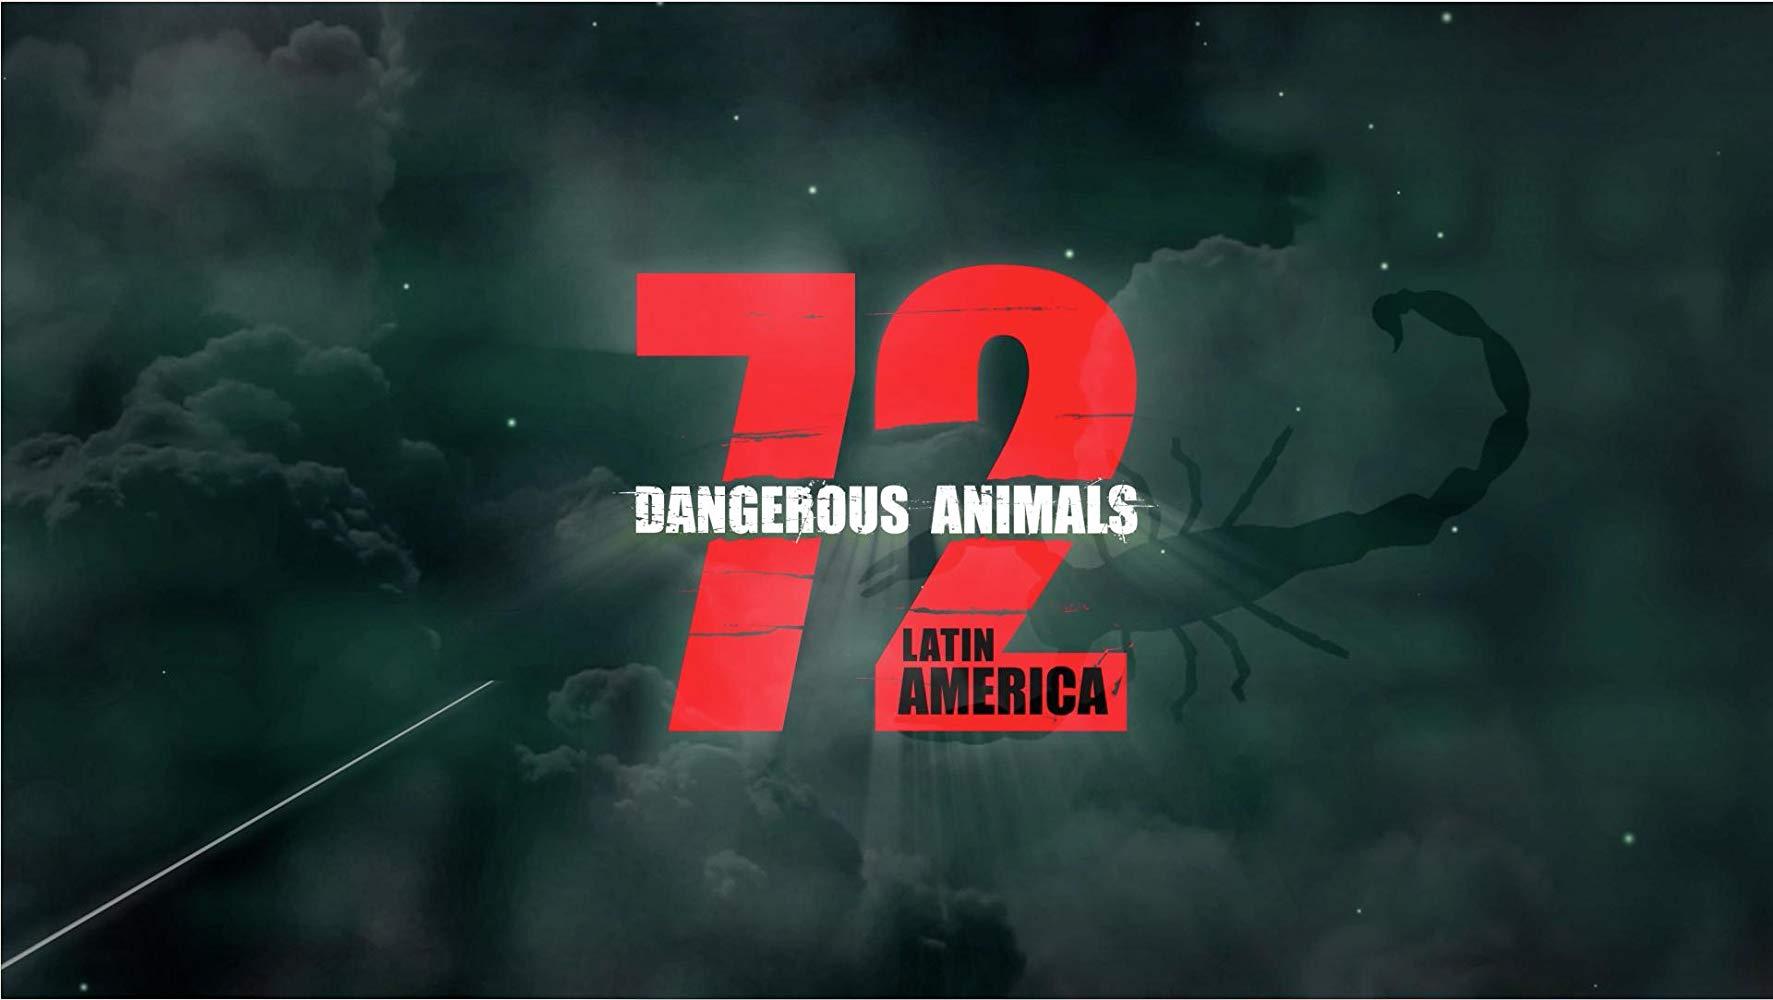 72-animales-peligrosos-Am%C3%A9rica-Latina-Series-de-naturaleza.jpg